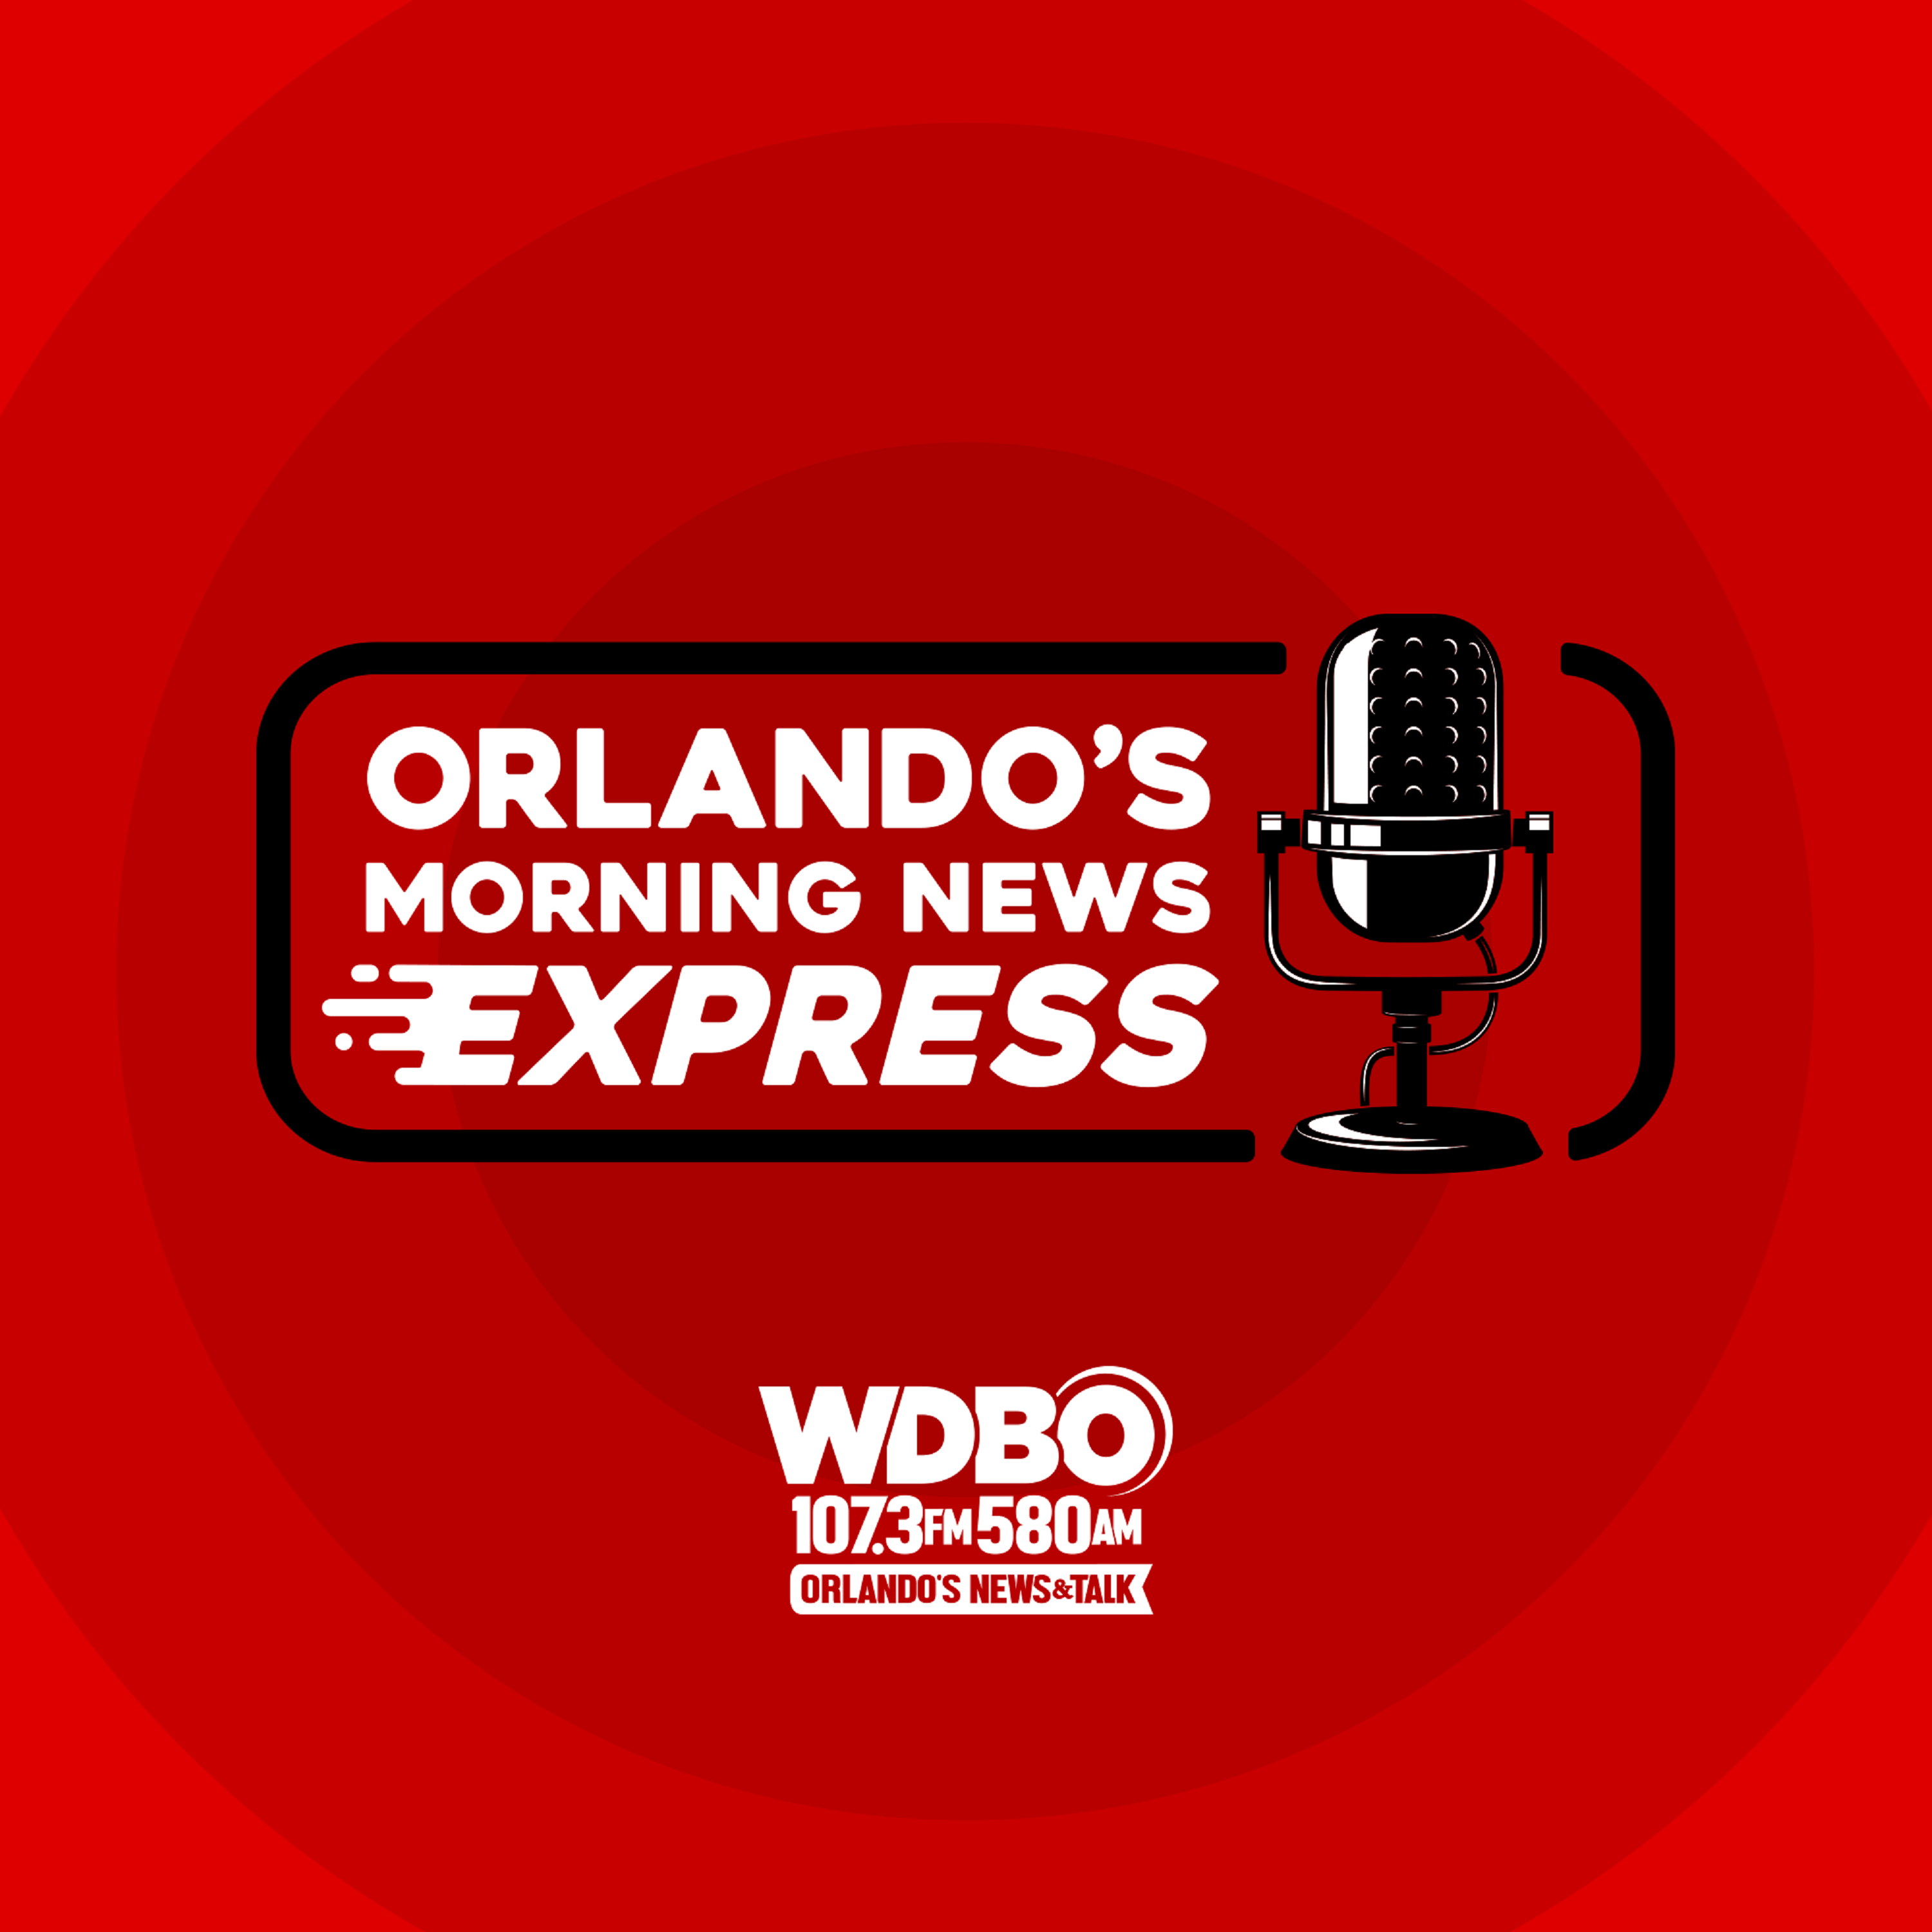 Orlando's Morning News Express